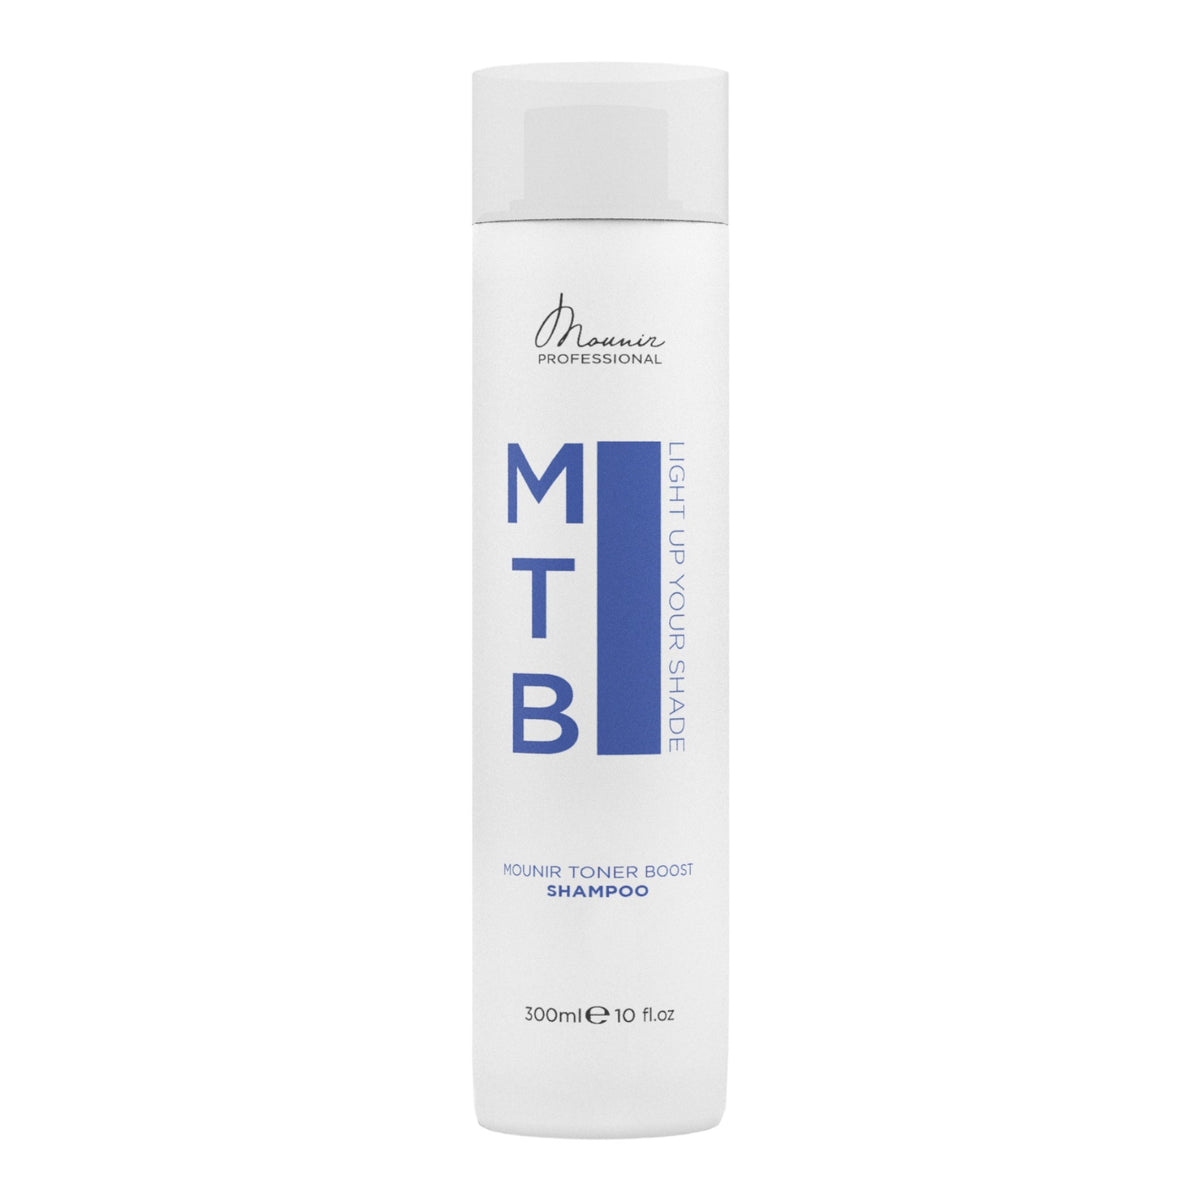 Mounir Toner Boost Light Up Your Shade Shampoo 300ml